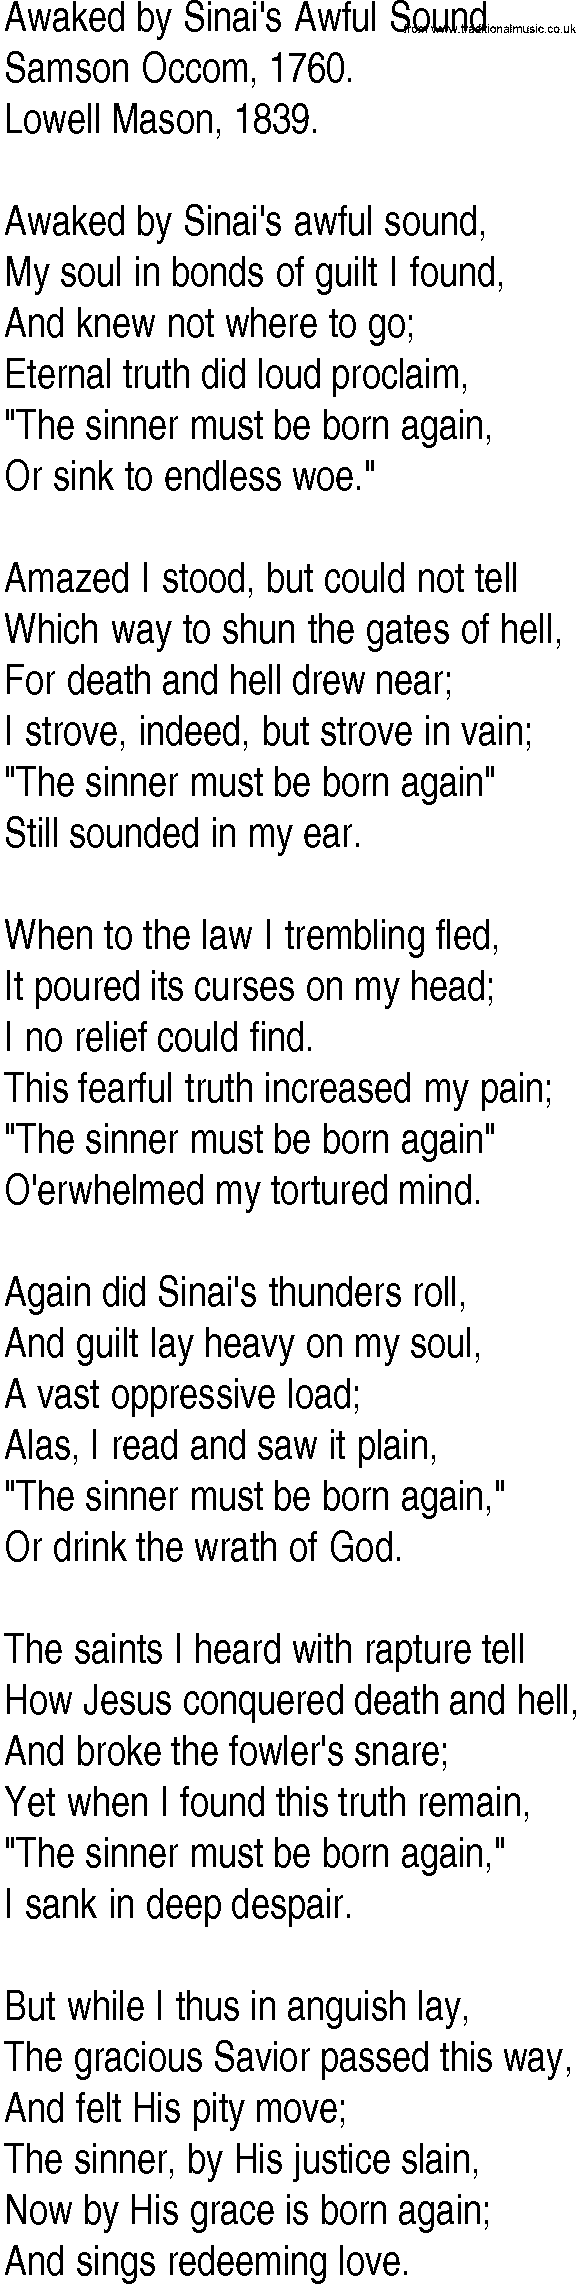 Hymn and Gospel Song: Awaked by Sinai's Awful Sound by Samson Occom lyrics